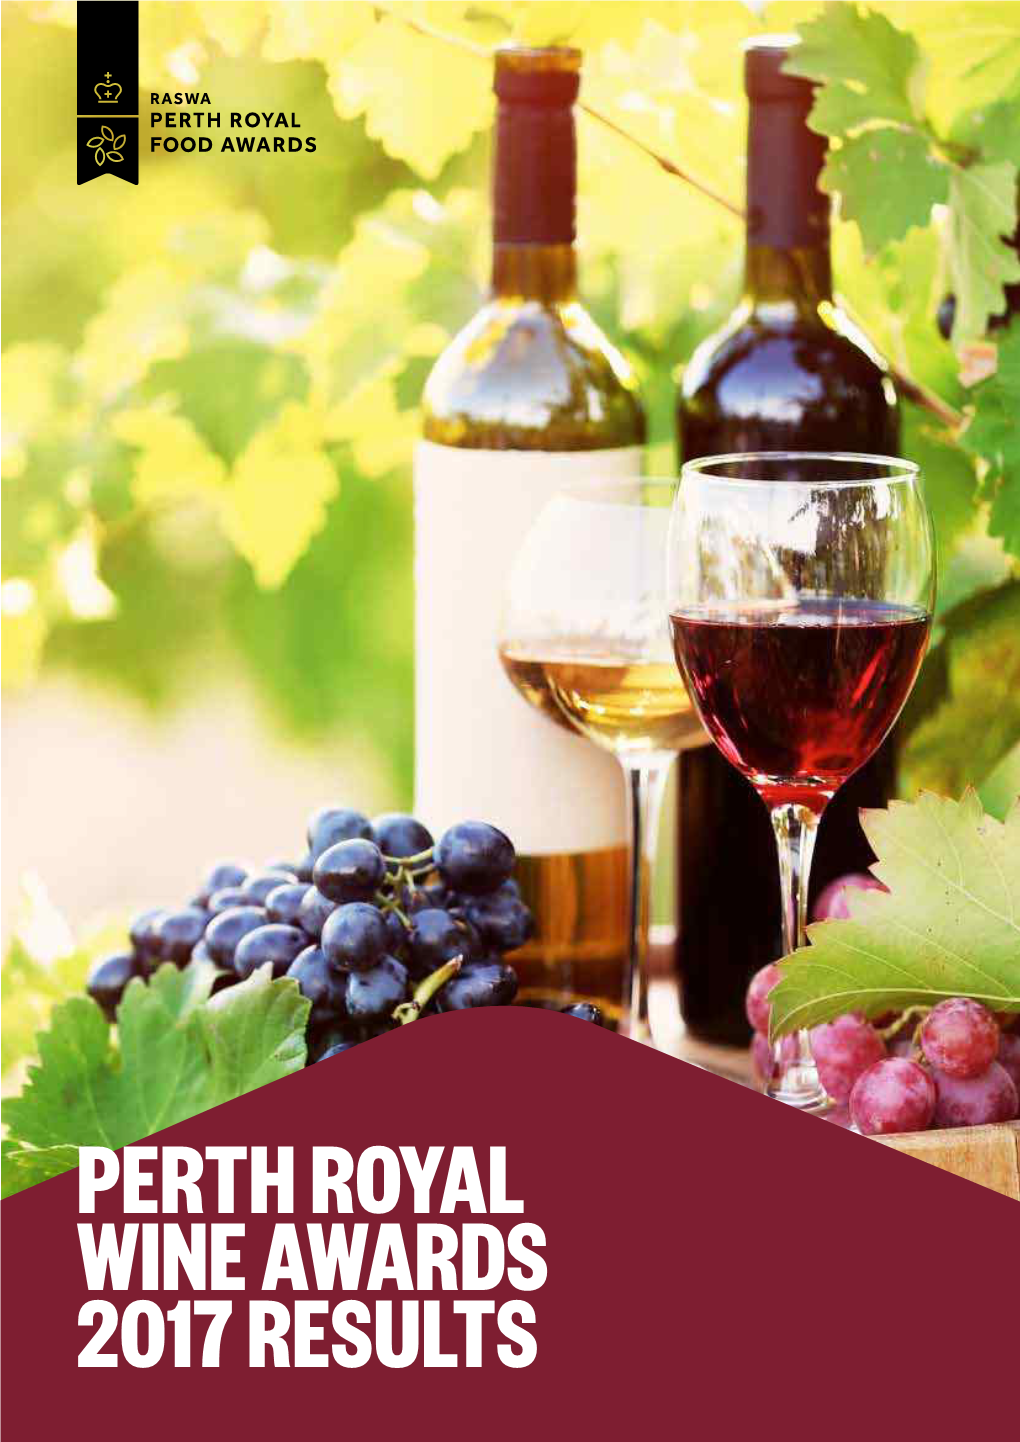 Perth Royal Wine Awards 2017 Results 2 Perth Royal Wine Awards 2017 Results Contents